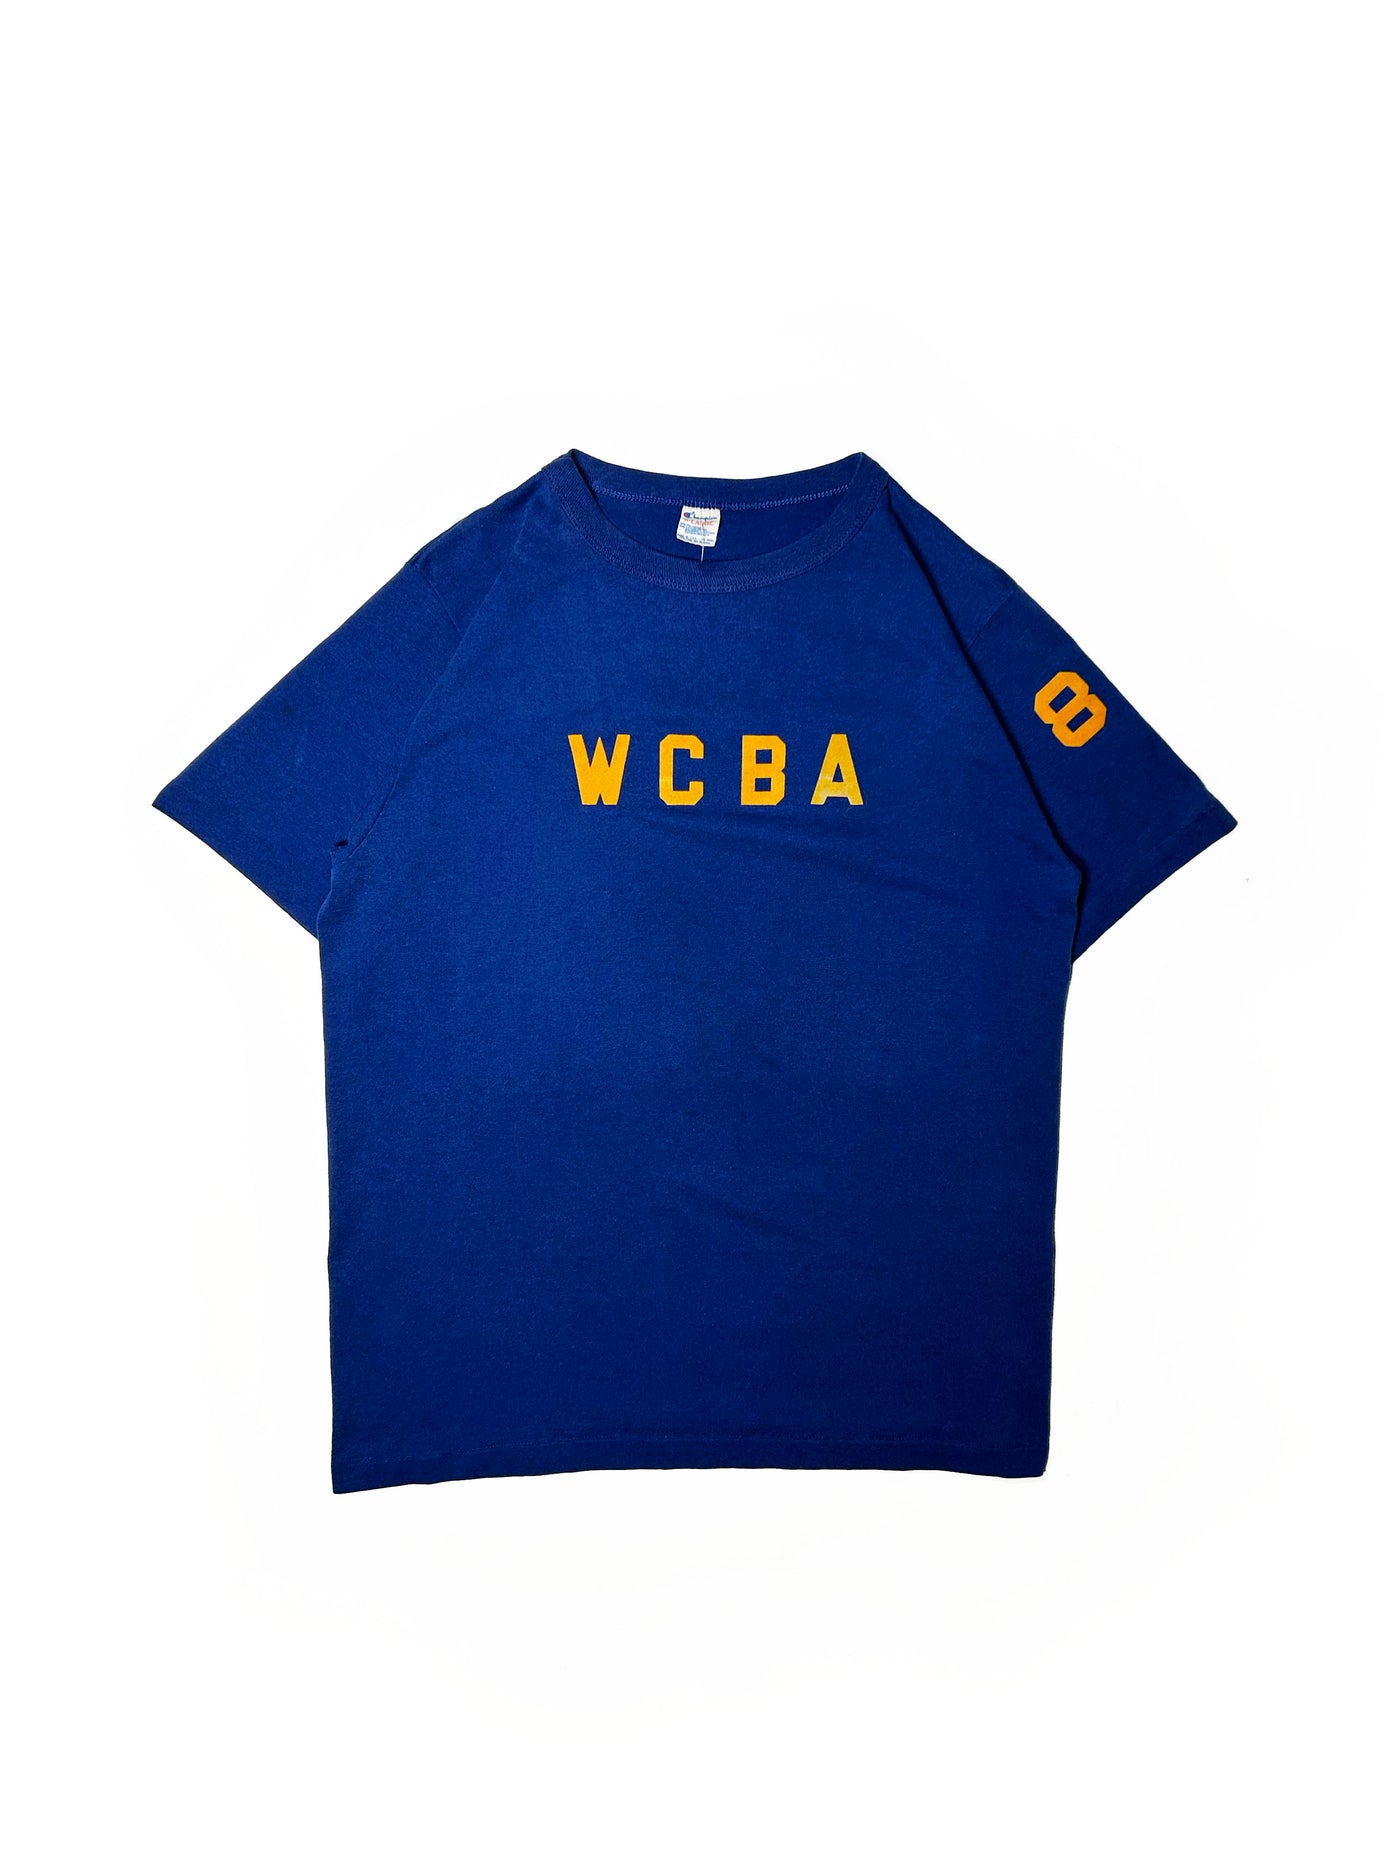 Vintage 1986 WCBA Champion T-Shirt